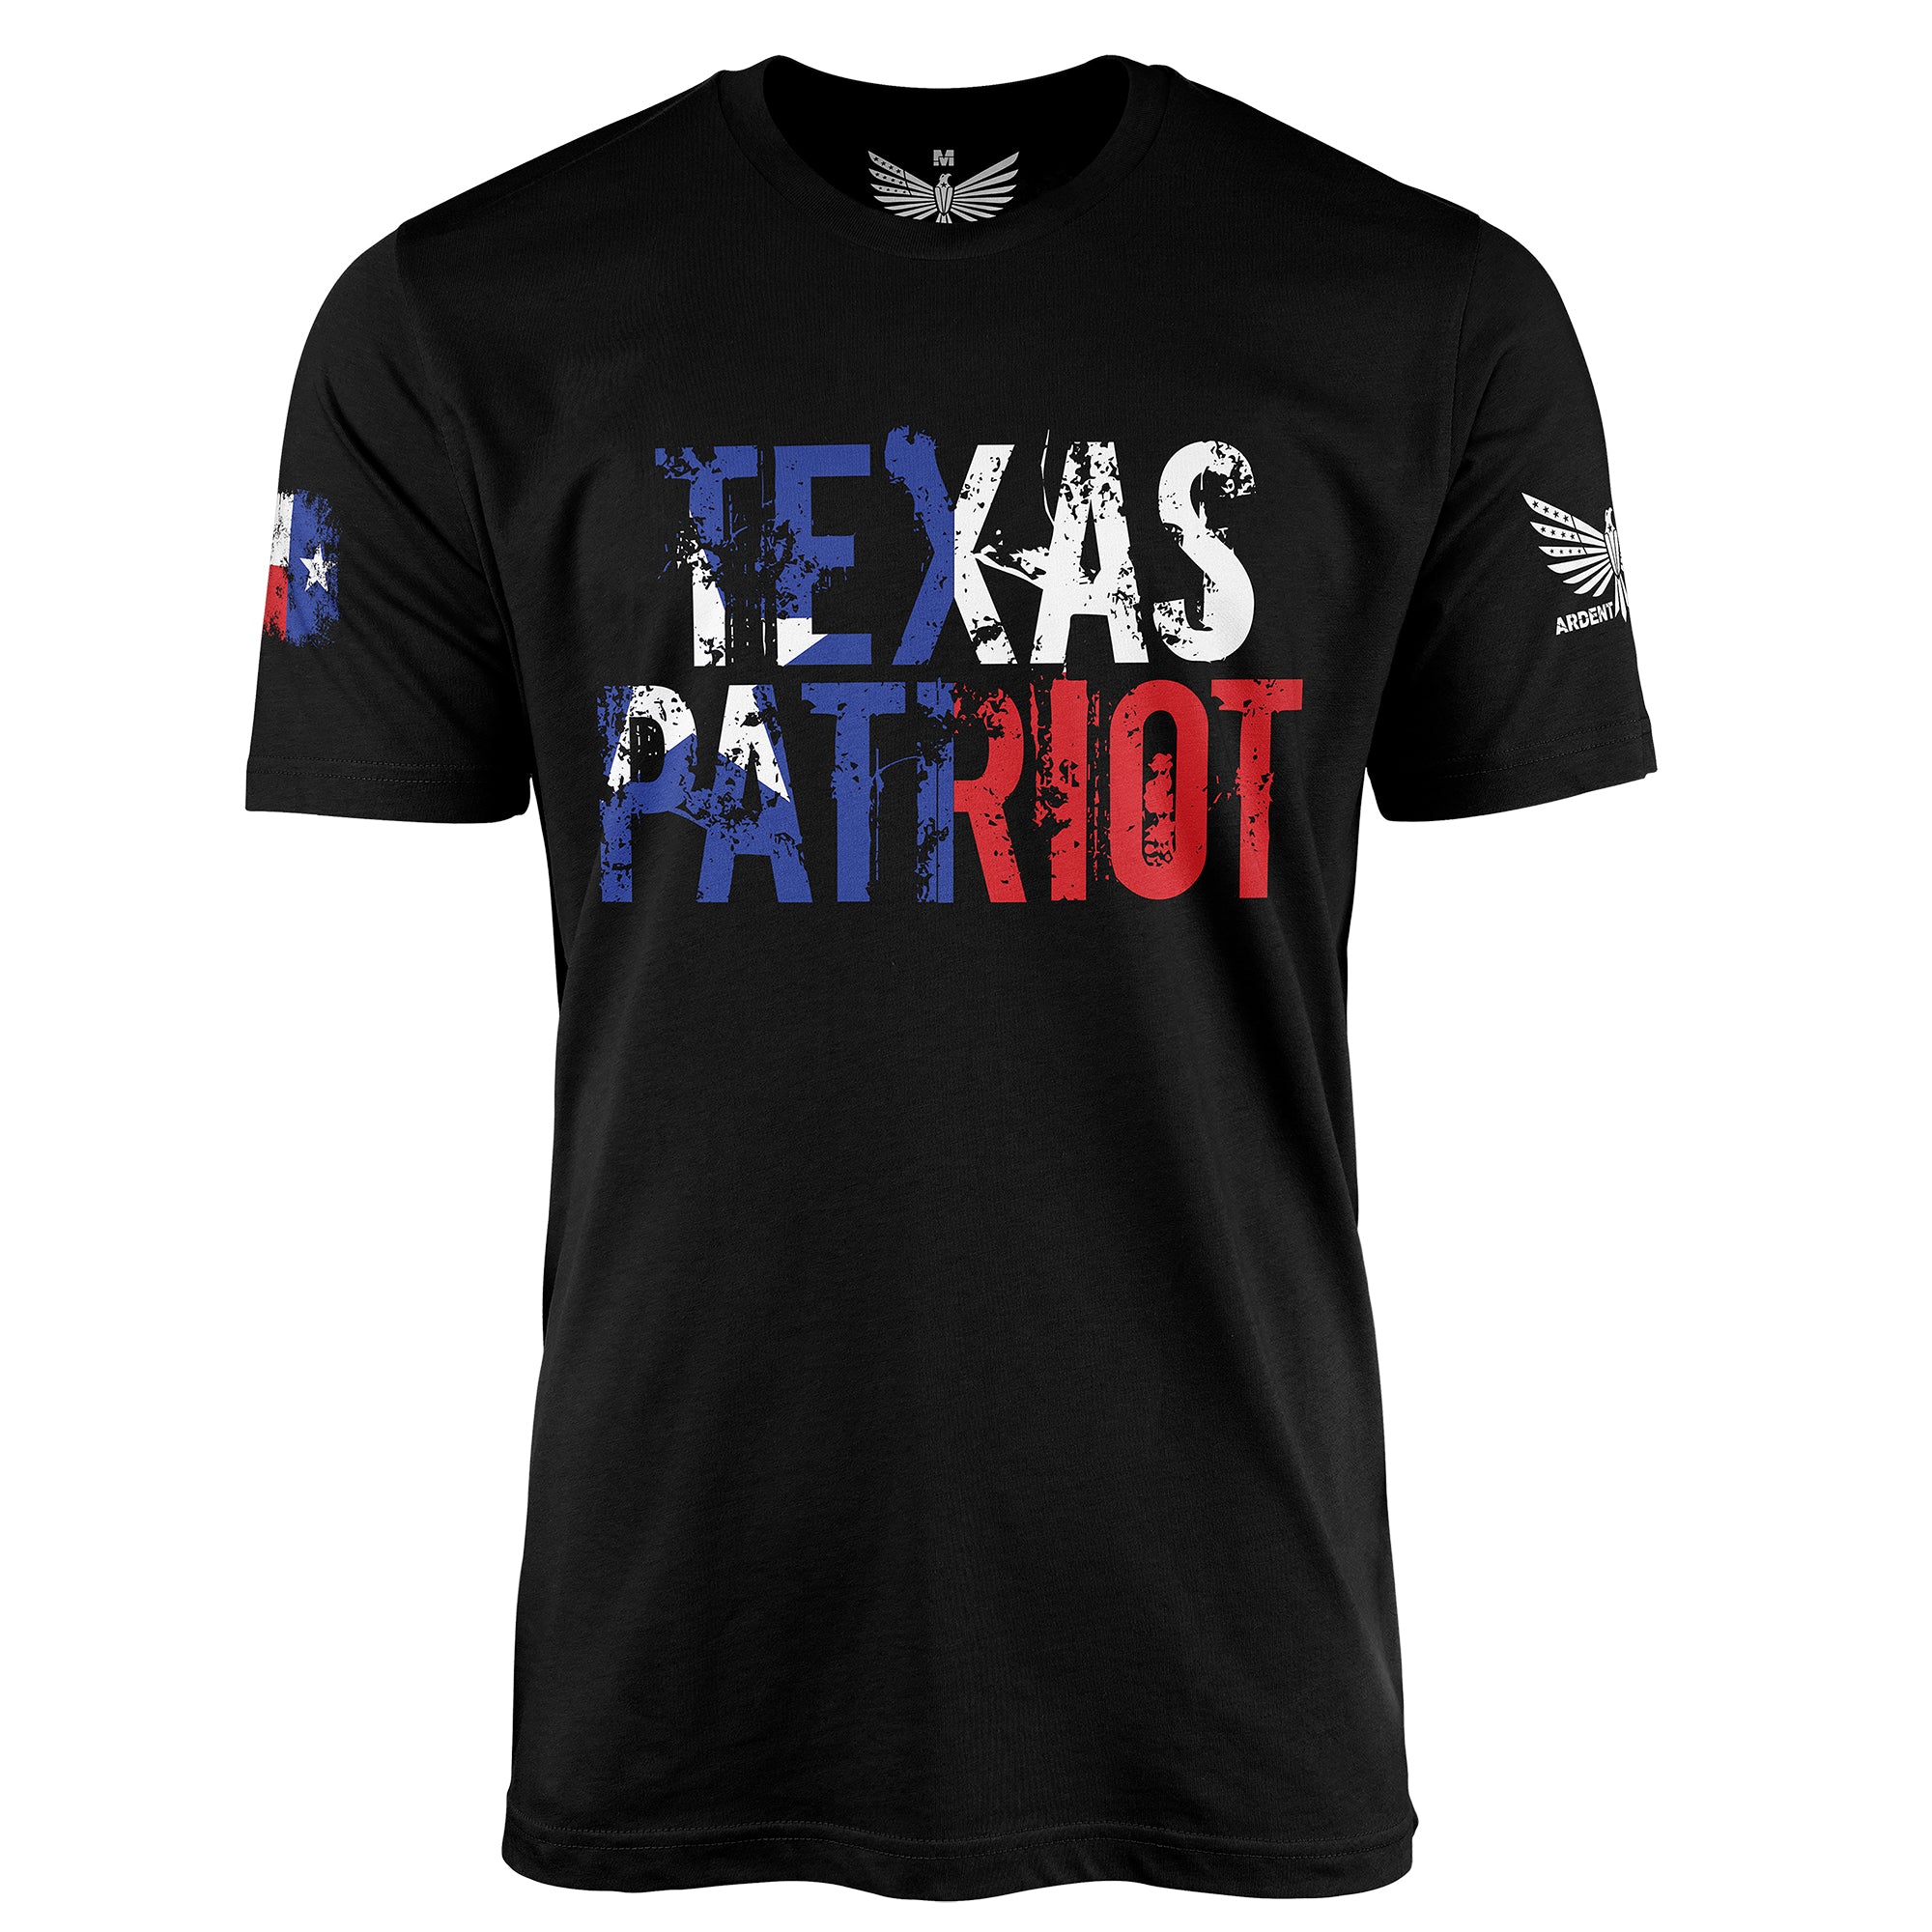 Texas Patriot-Men's Shirt-S-Ardent Patriot Apparel Co.